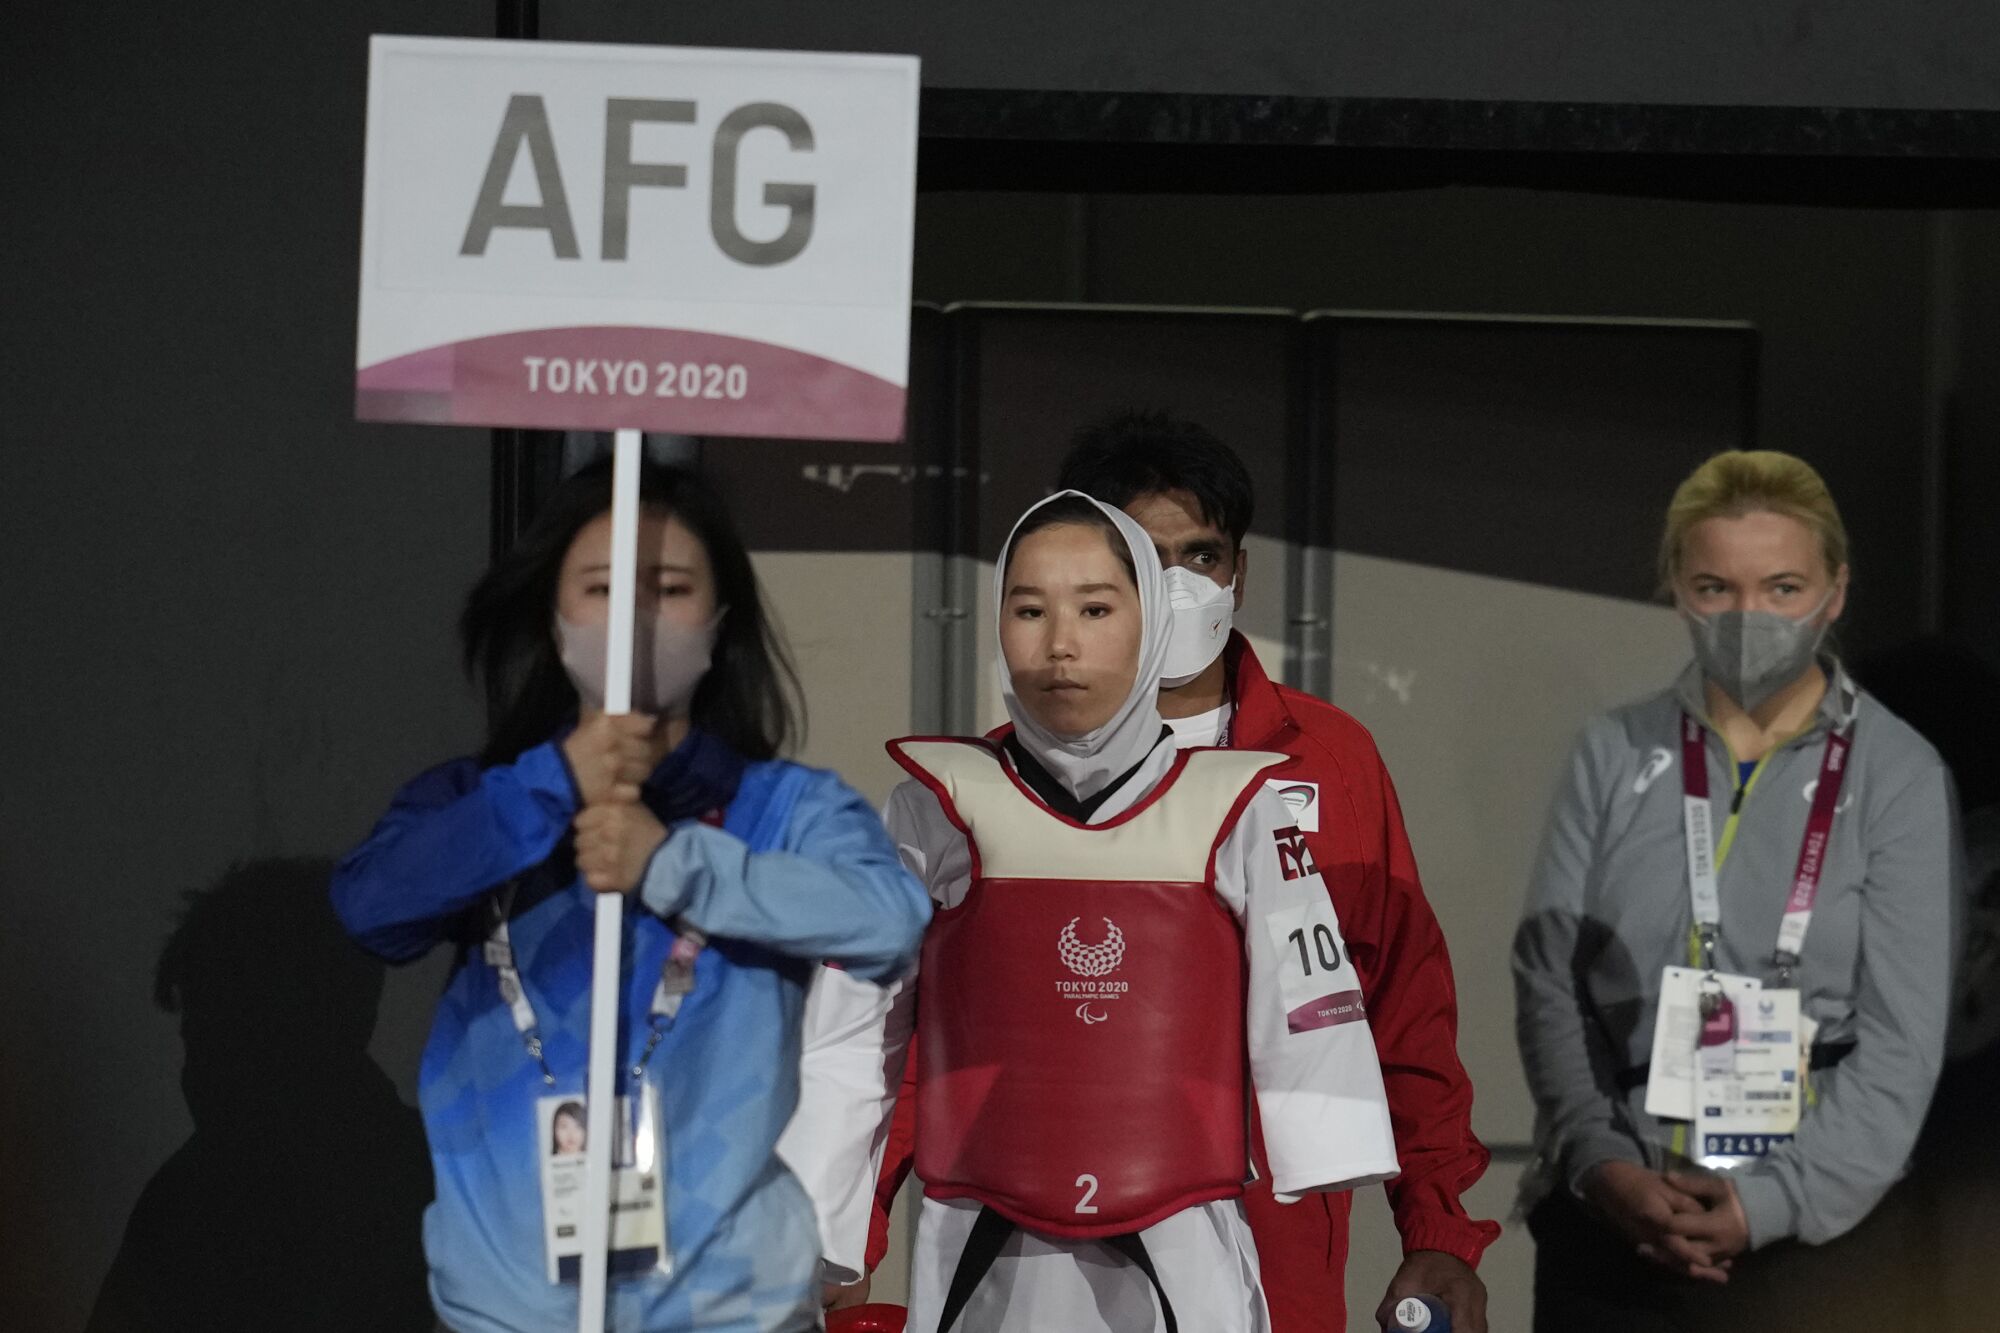 Afghanistan's Zakia Khudadadi, center, enters the competition venue prior to her Taekwondo match.